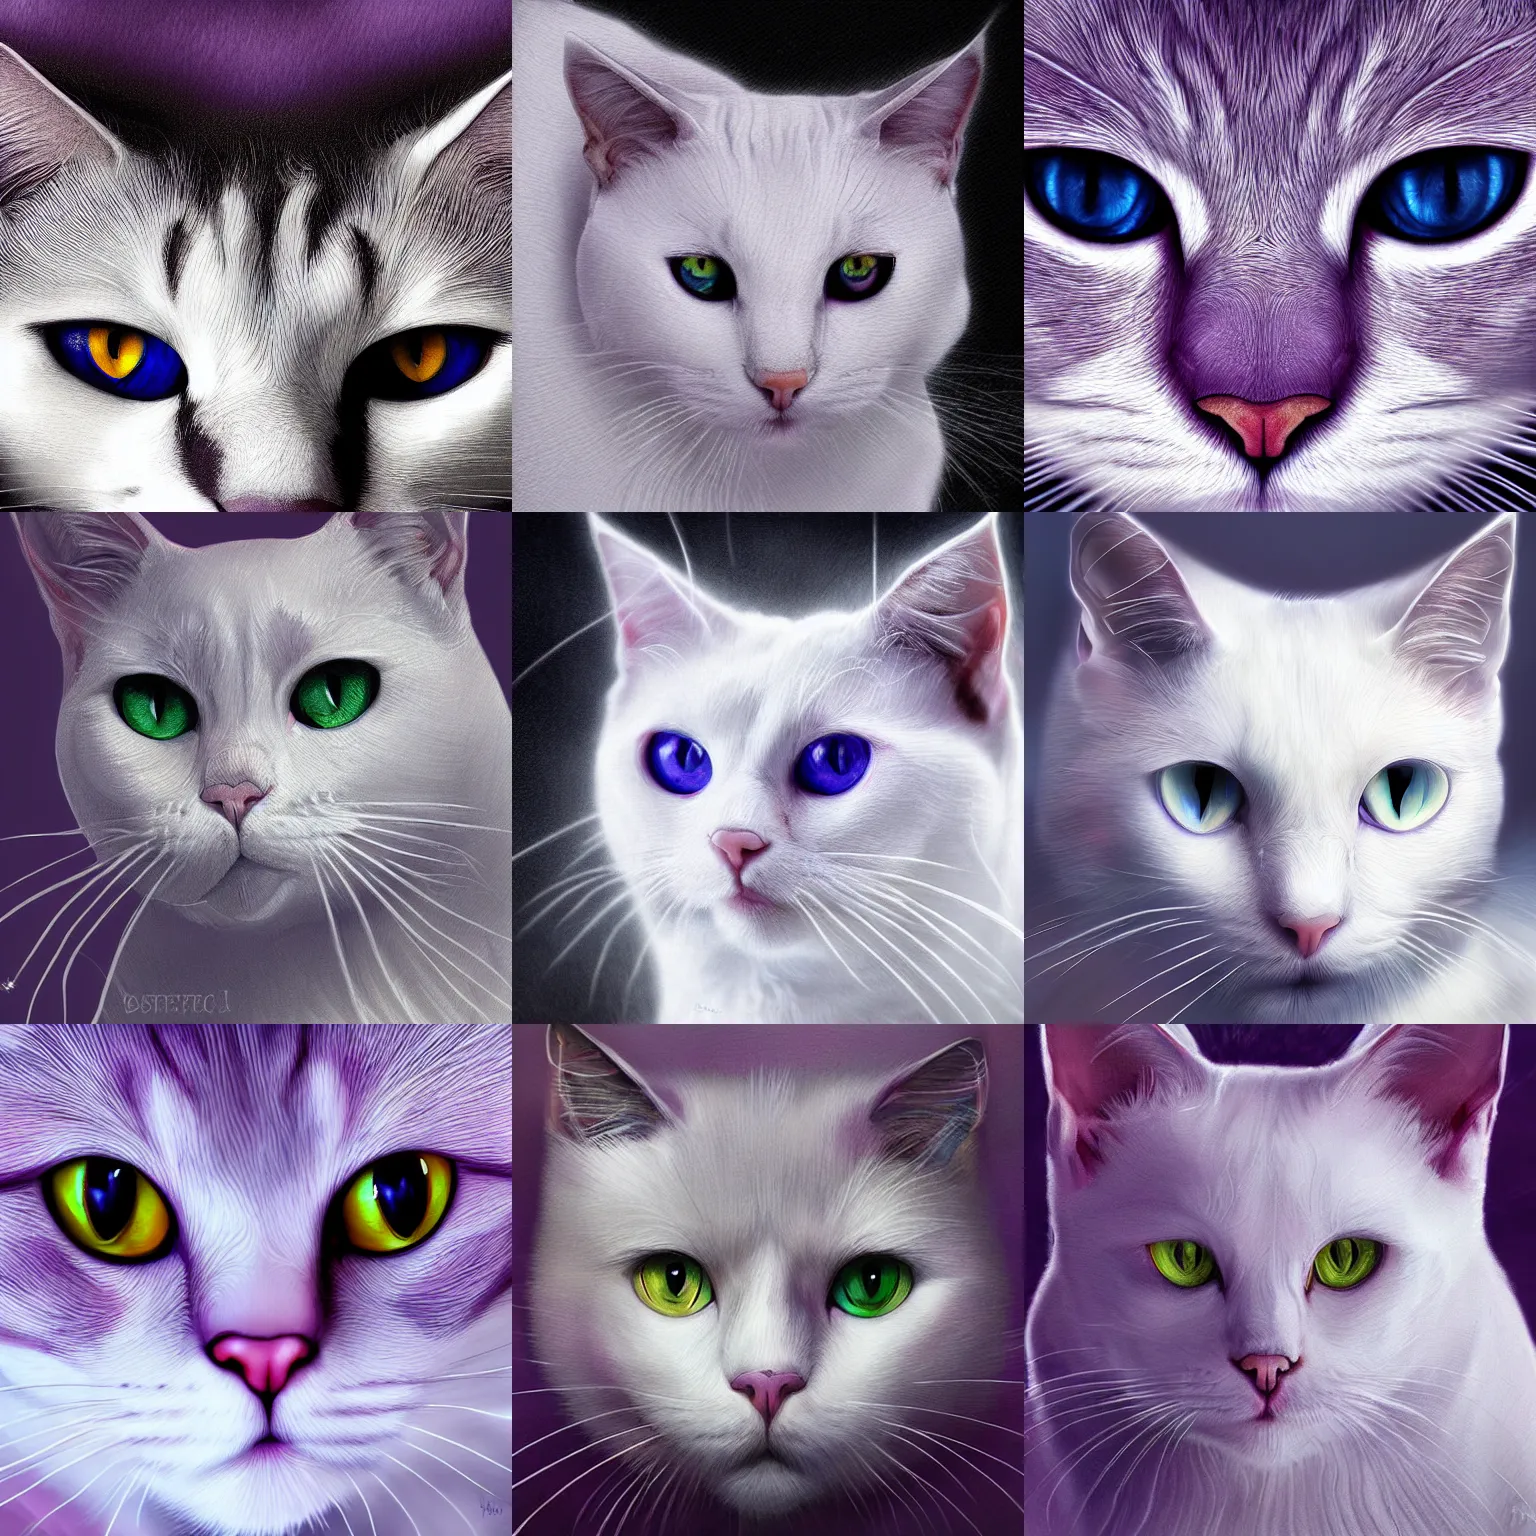 Prompt: Portrait of a white cat, purple eyes, intense, focused, fantasy, digital art, HD, detailed.